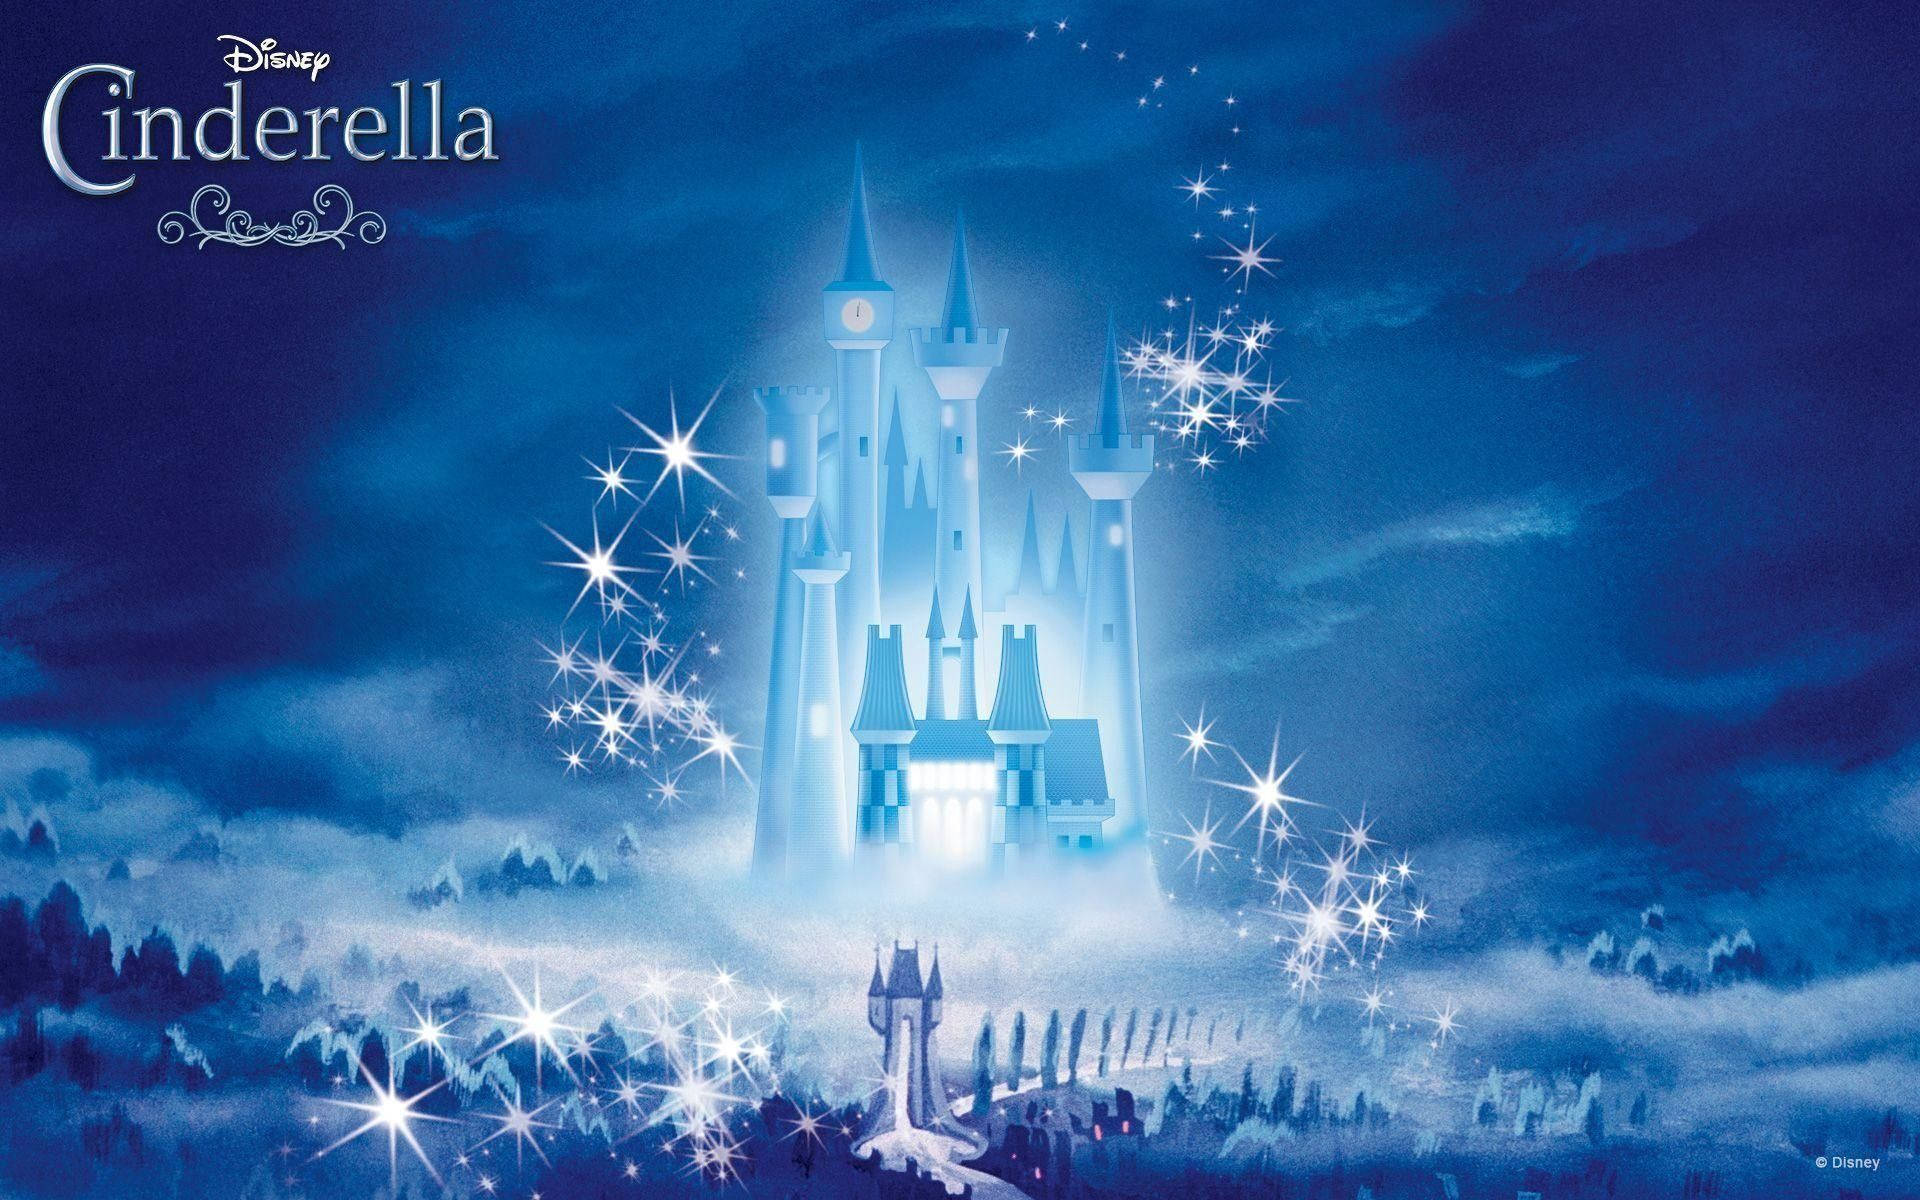 Free Cinderella Wallpaper Downloads, [100+] Cinderella Wallpapers for FREE  